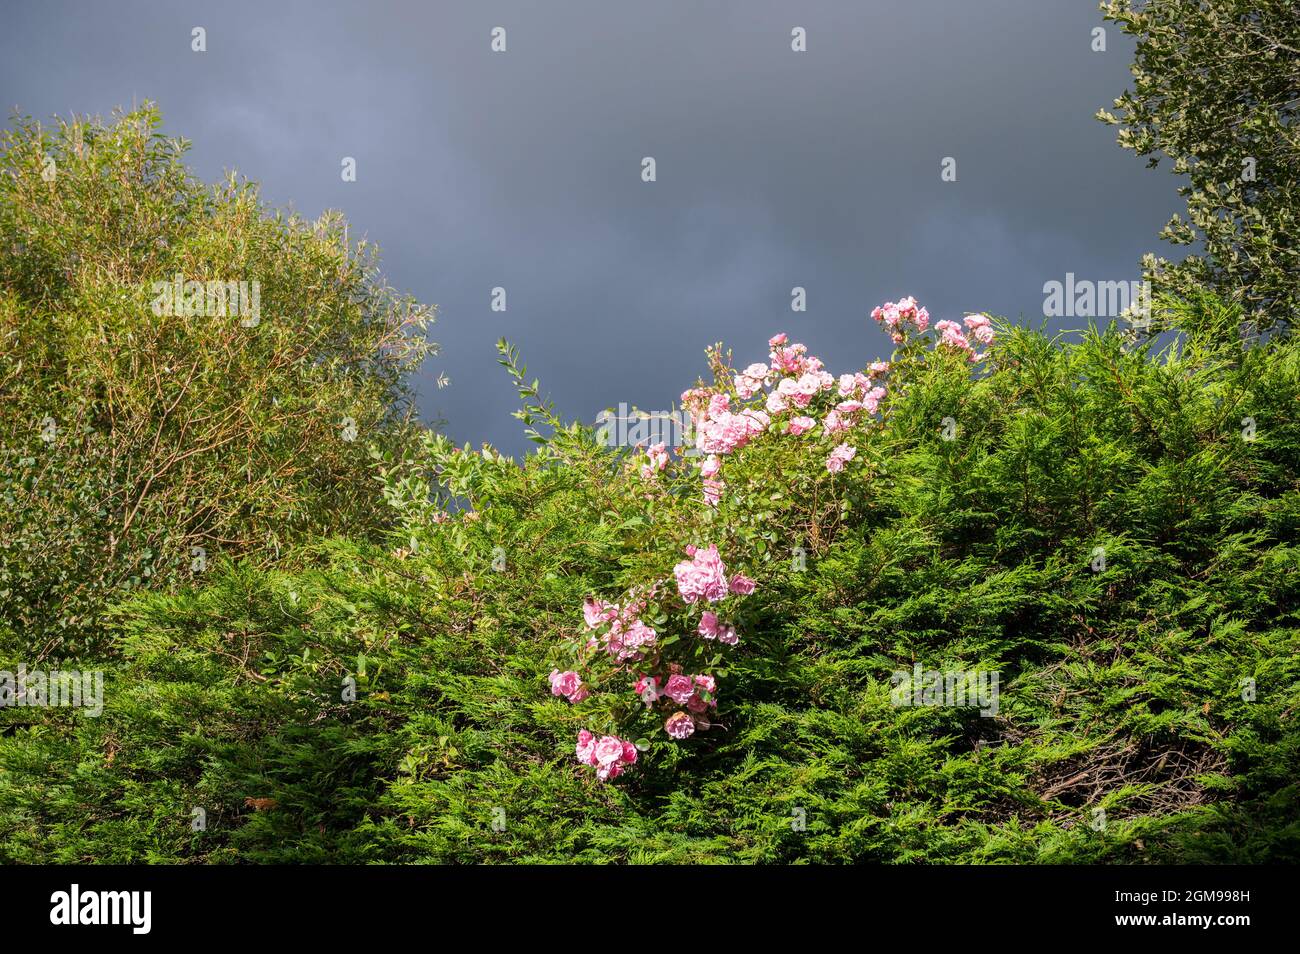 Dog rose climbing and flowering through leylandii hedge in sunlight with dark threatening sky behind. Stock Photo